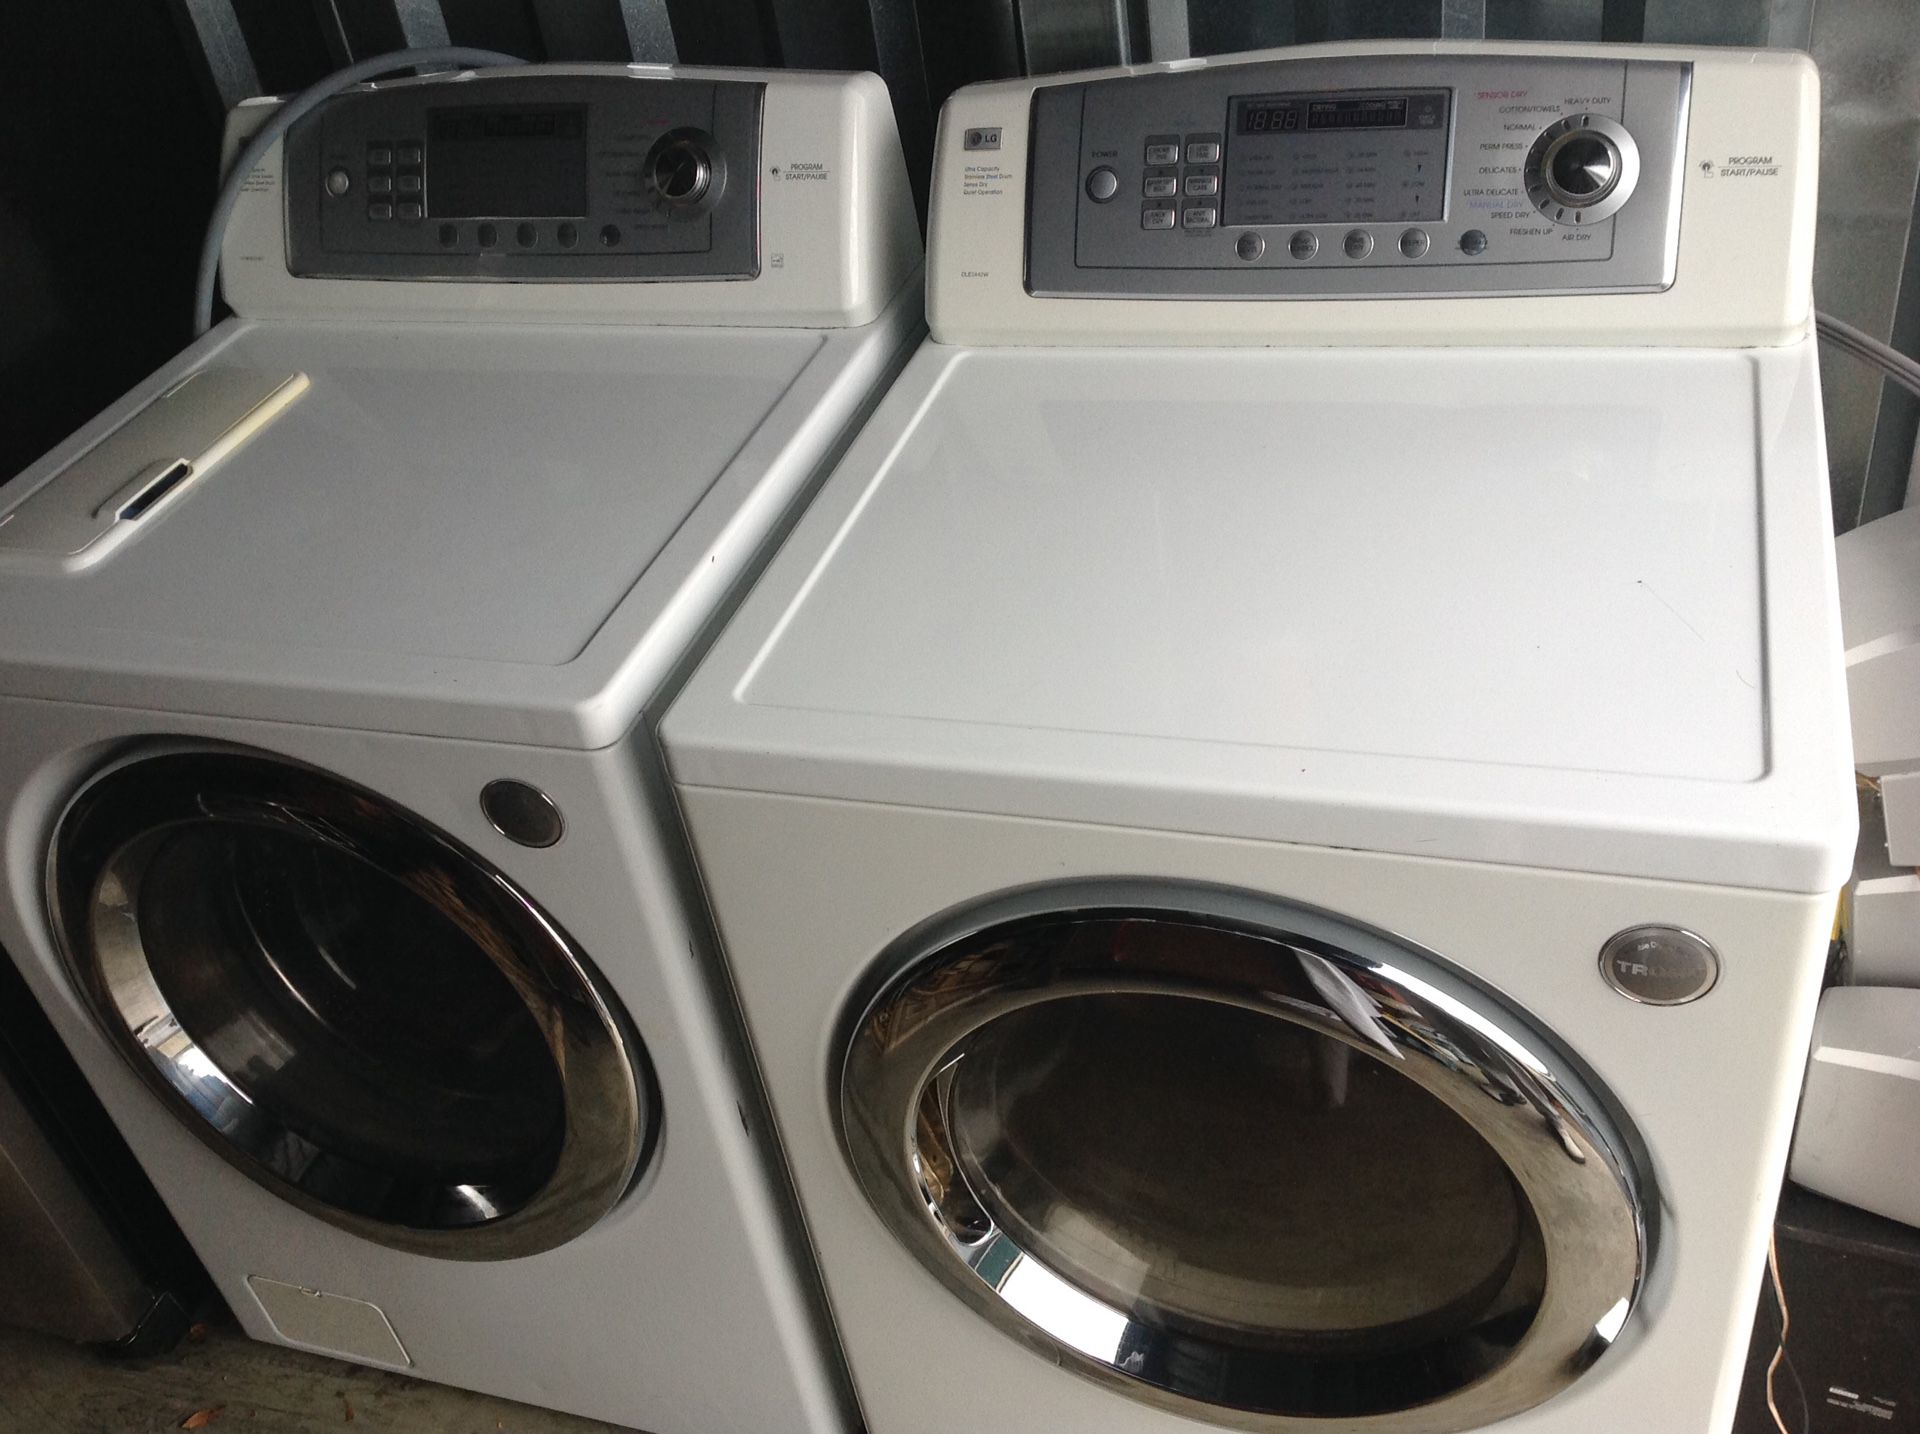 LG washer Dryer $ 450